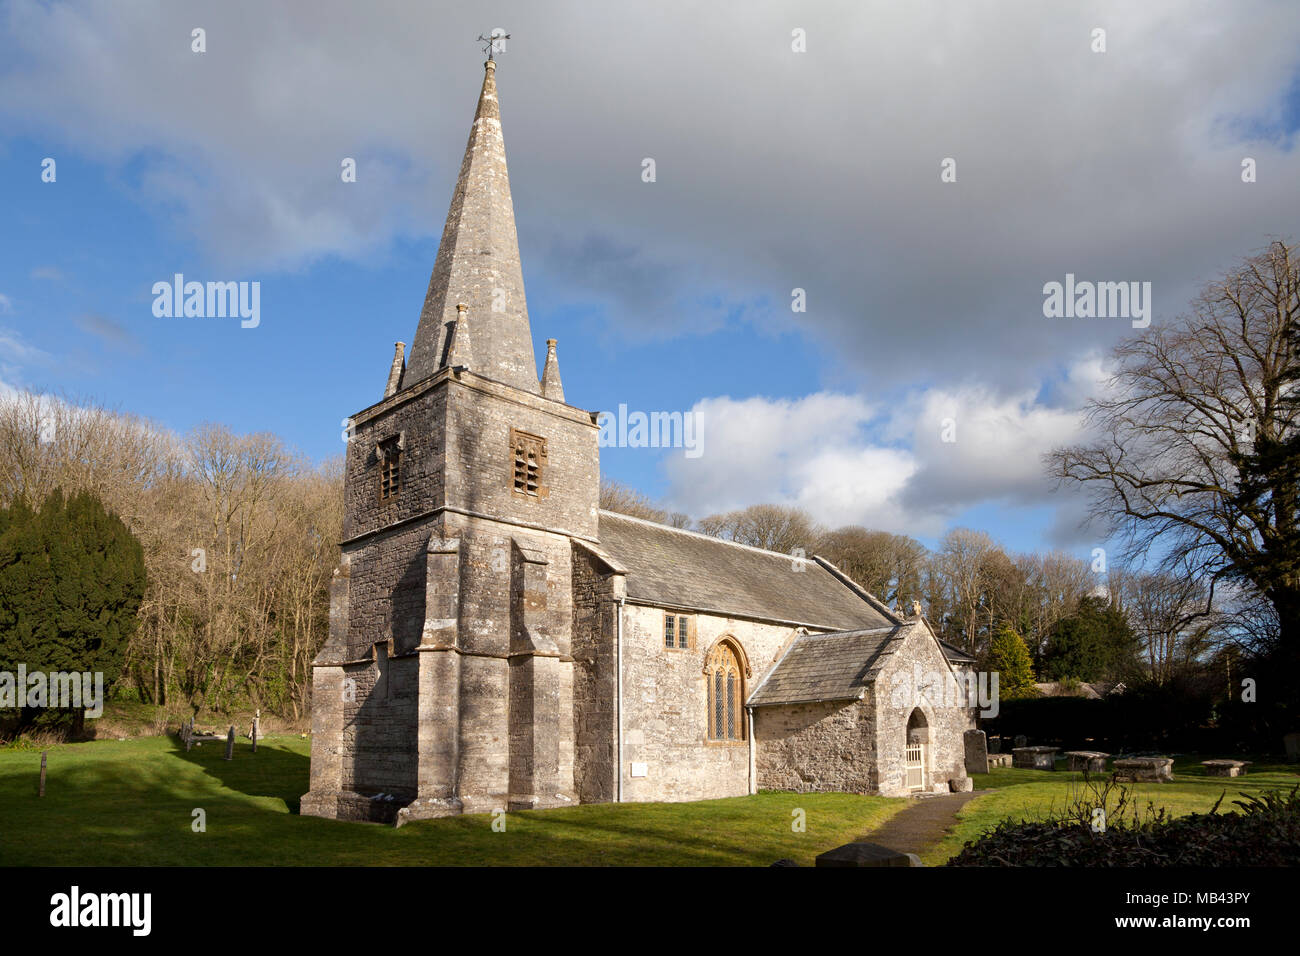 St. Michael's Church in the Dorset village of Winterbourne Steepleton. Stock Photo